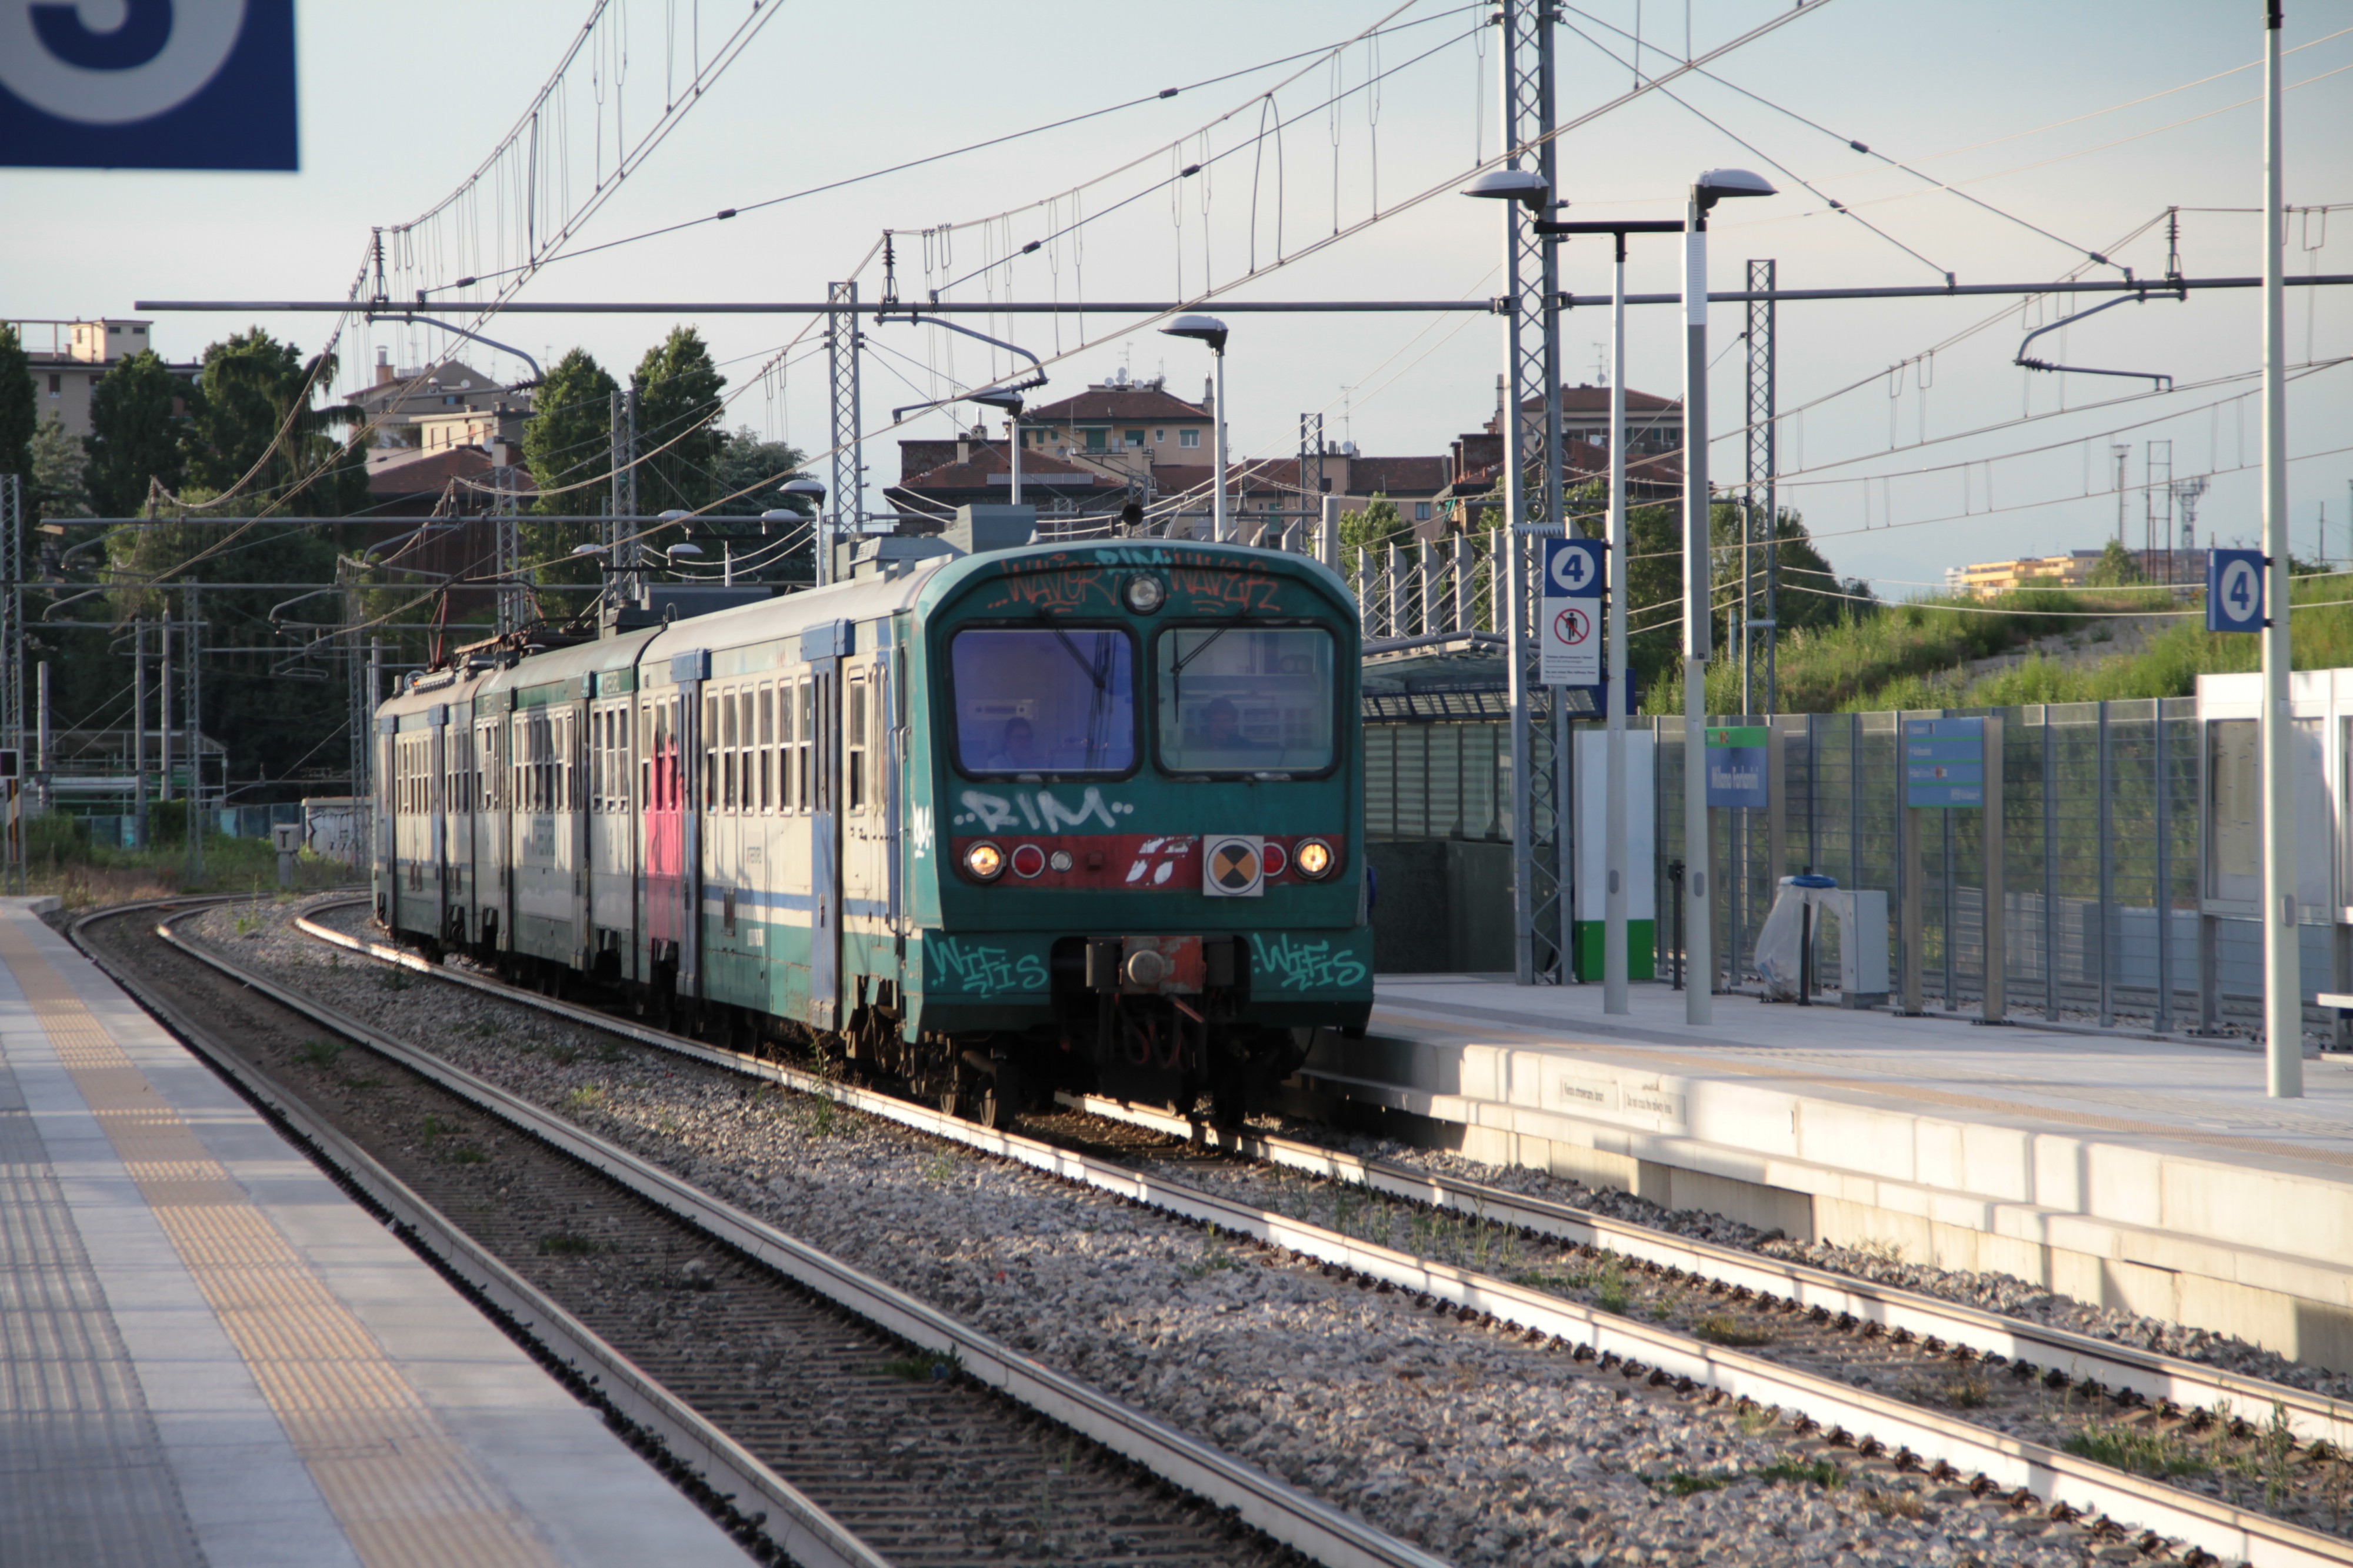 2016-06-21 Wikimania, Train station Milano Forlanini - Trenord (freddy2001) (03)